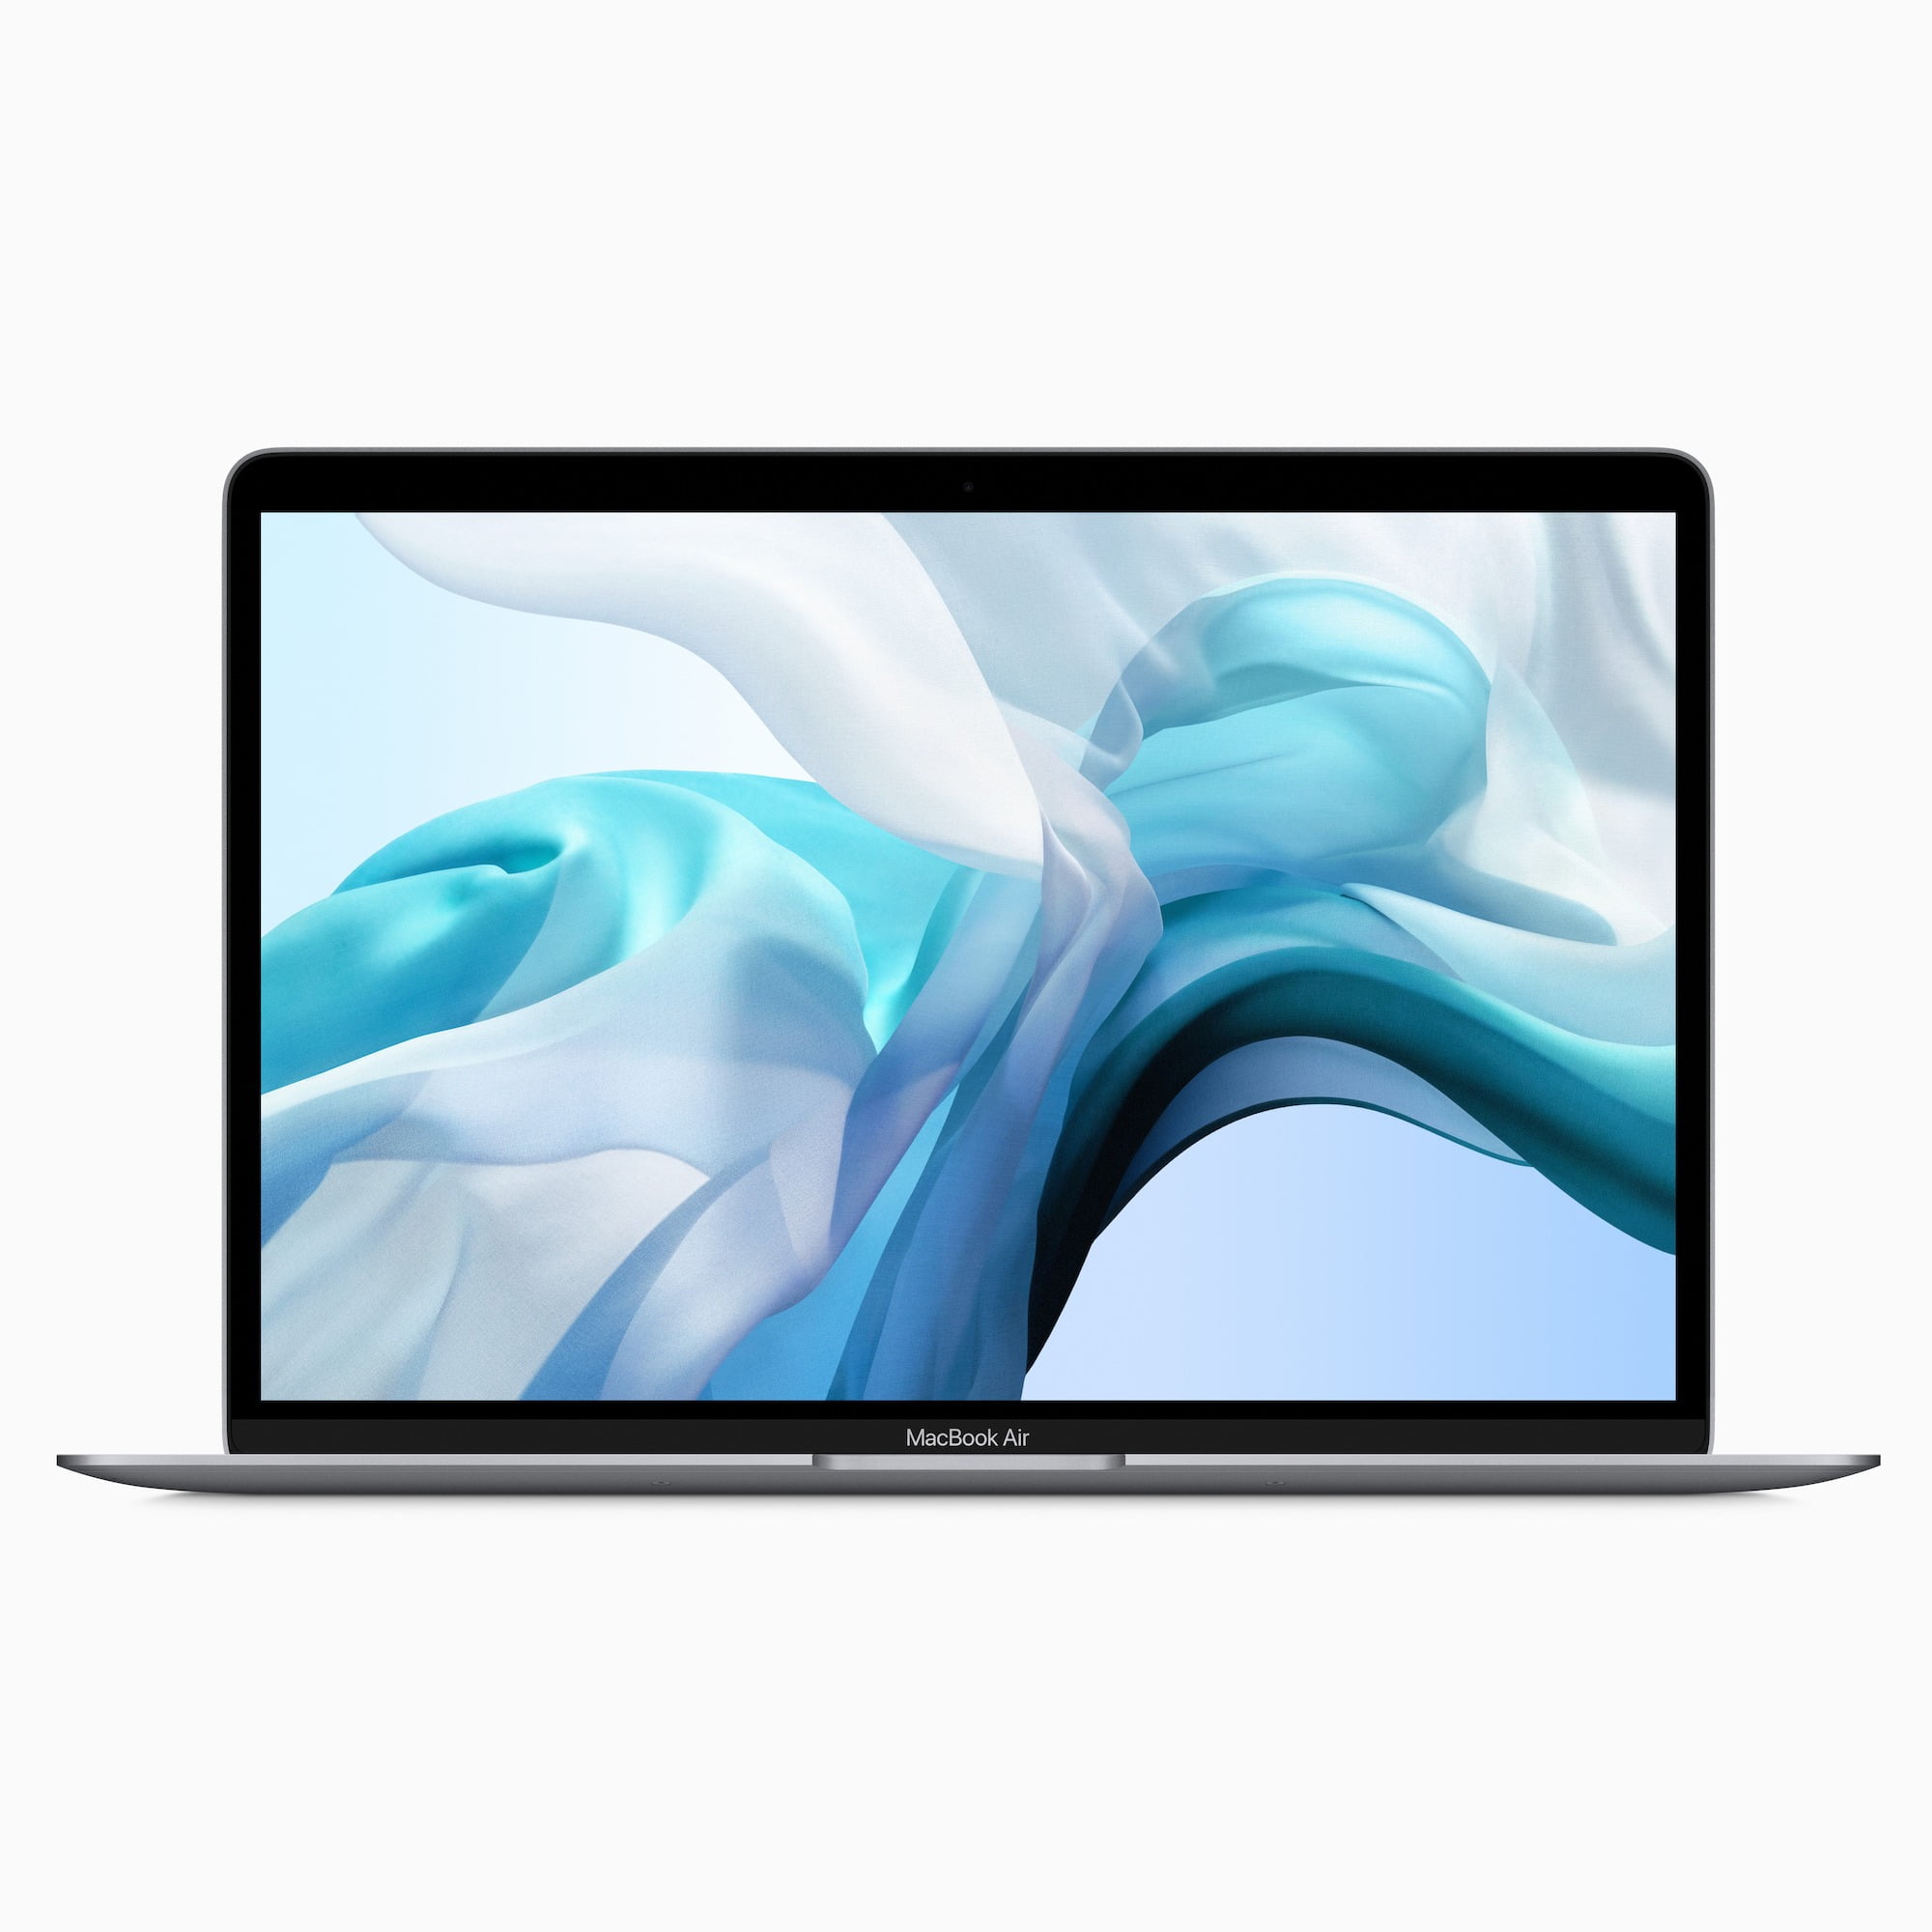 Apple MacBook Air and MacBook Pro update wallpaper screen 070919